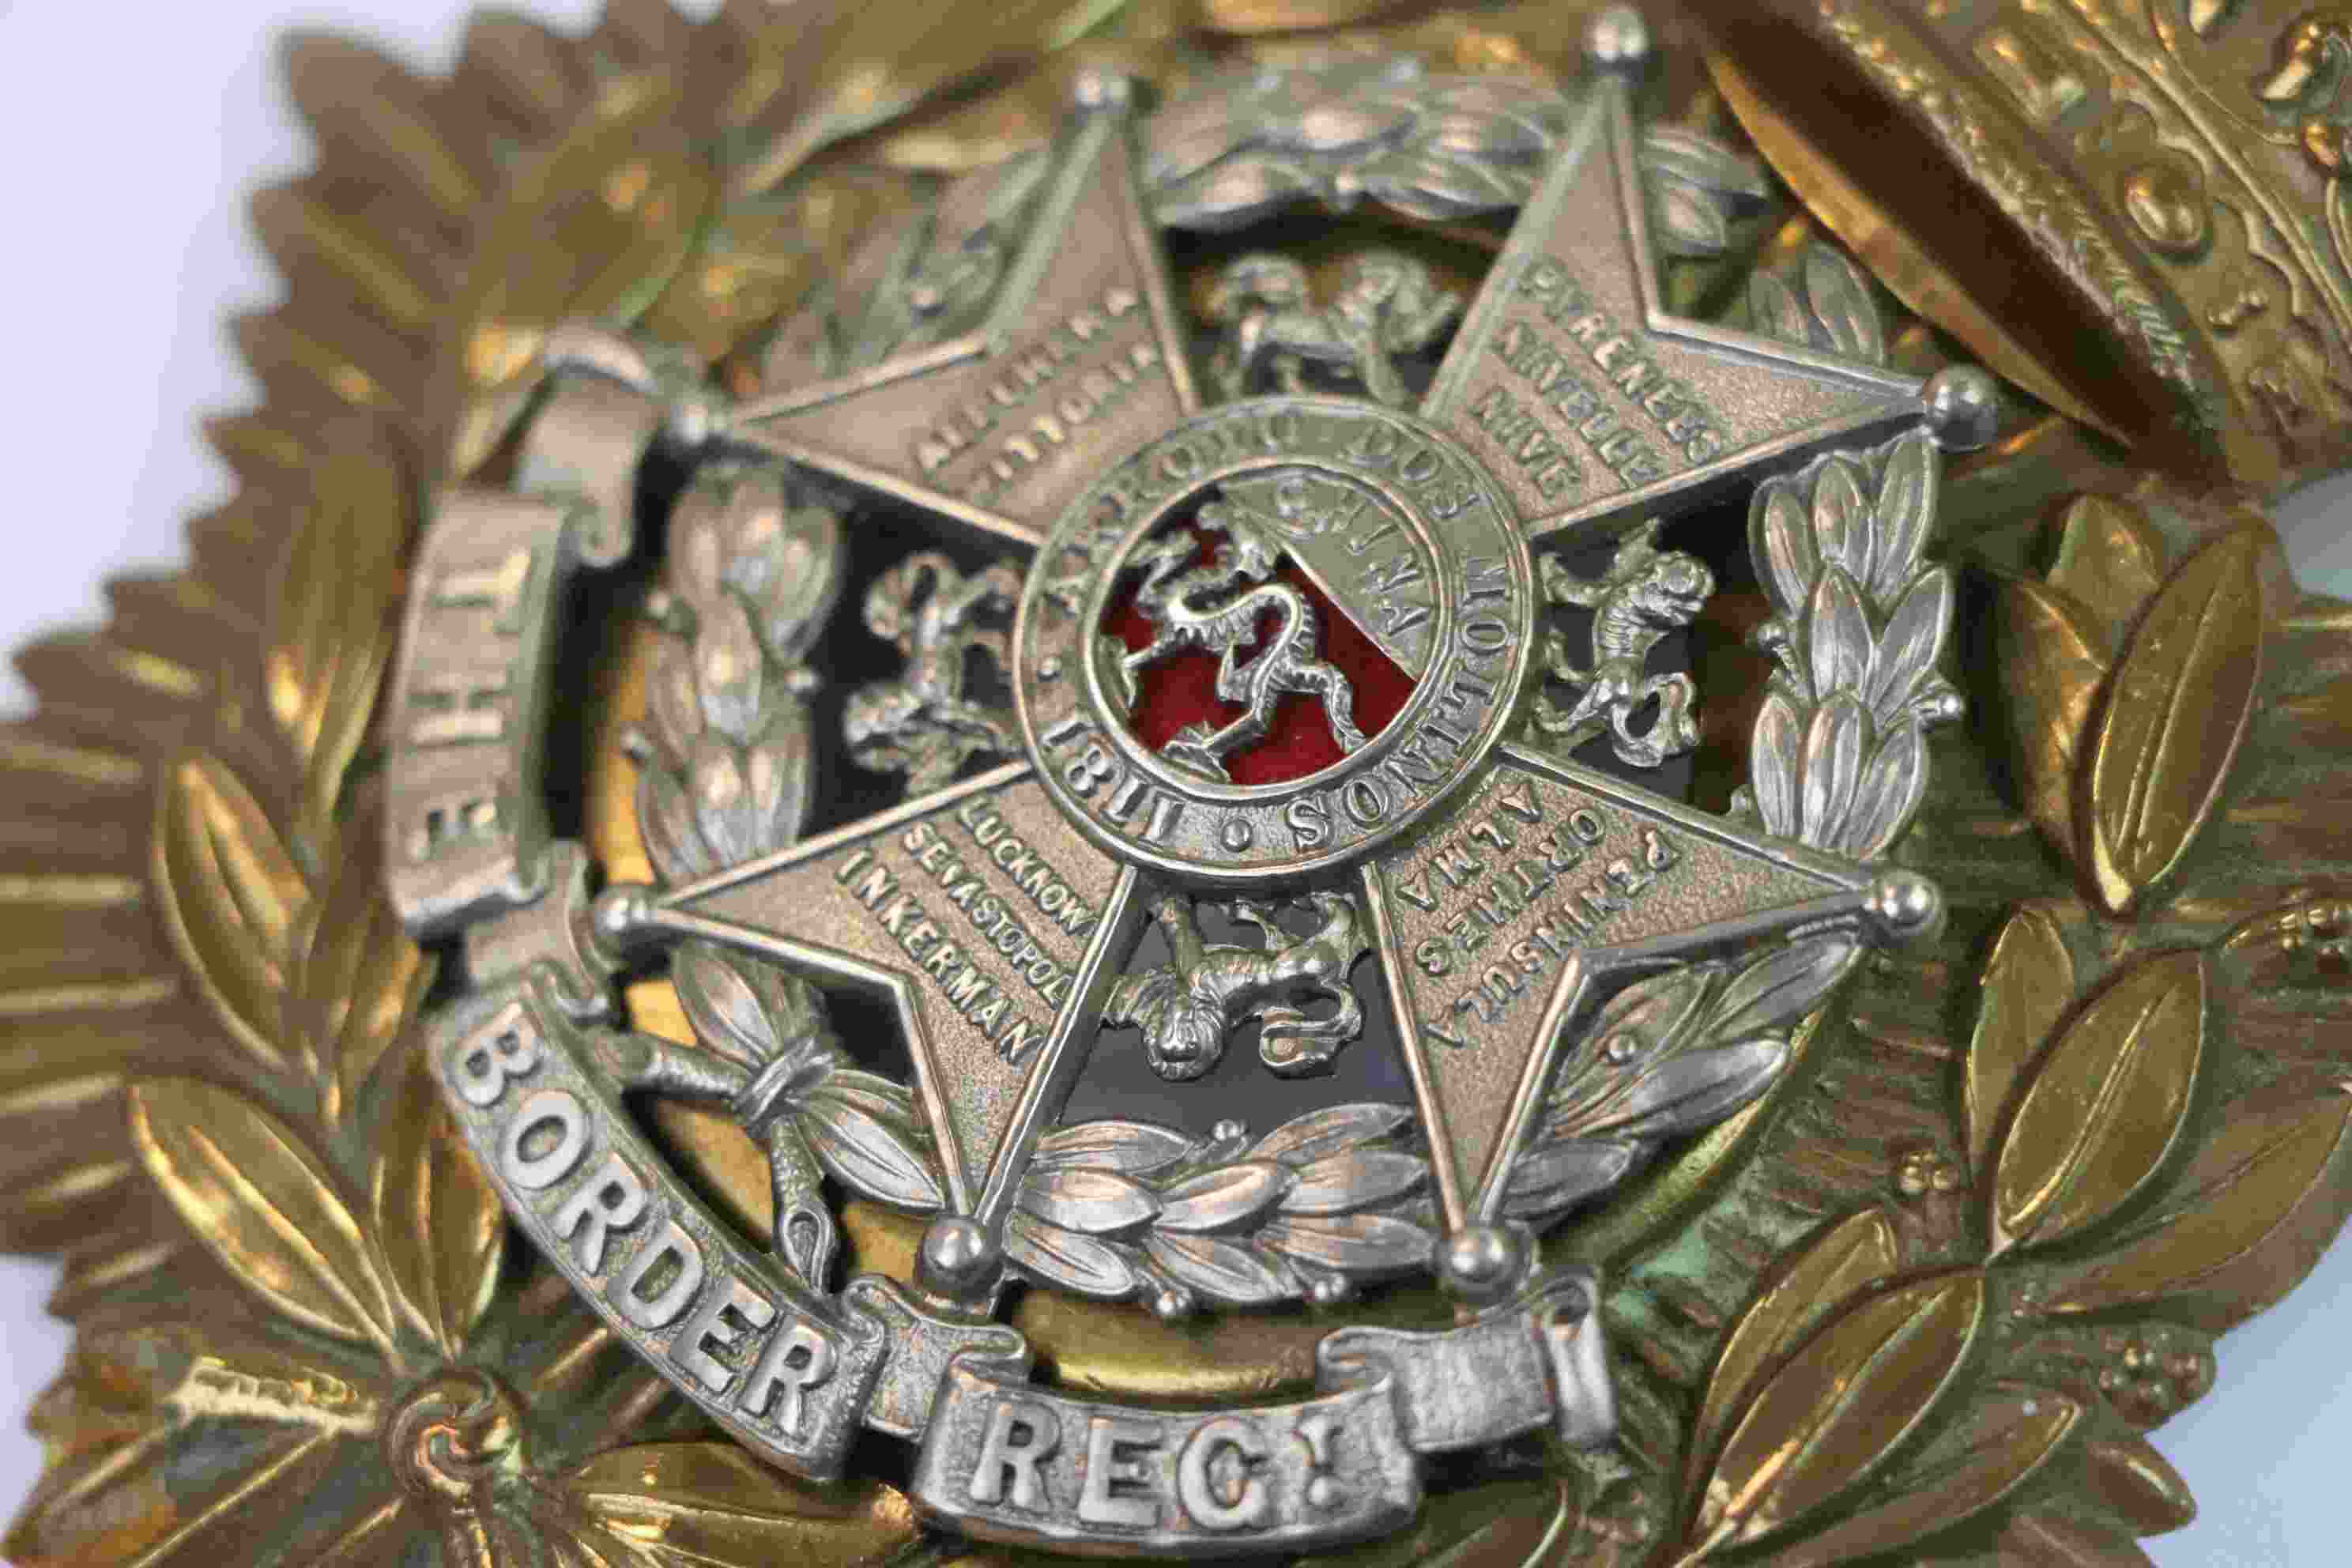 A King Crown The Border Regiment Helmet Plate / Badge. - Image 6 of 8